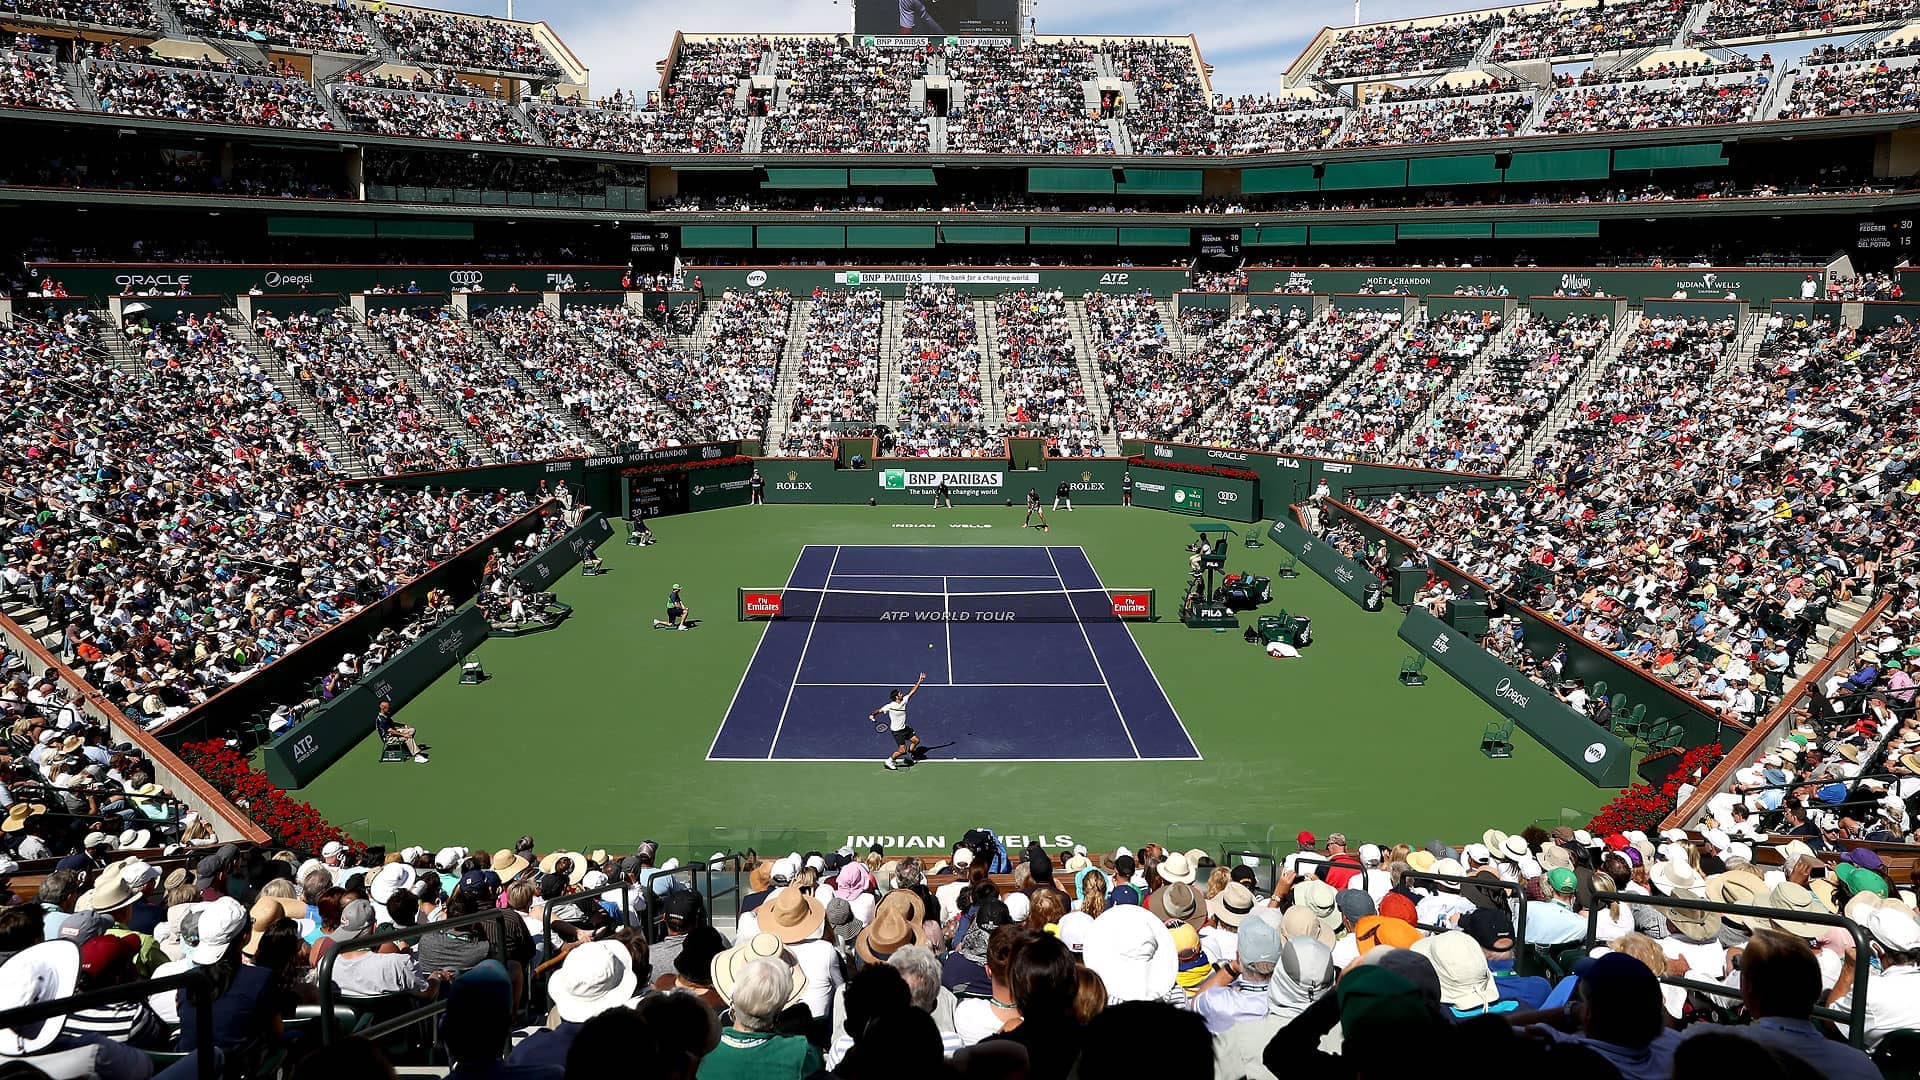 Vista principal del Stadium 1, la cancha central del BNP Paribas Open en el Indian Wells Tennis Garden.